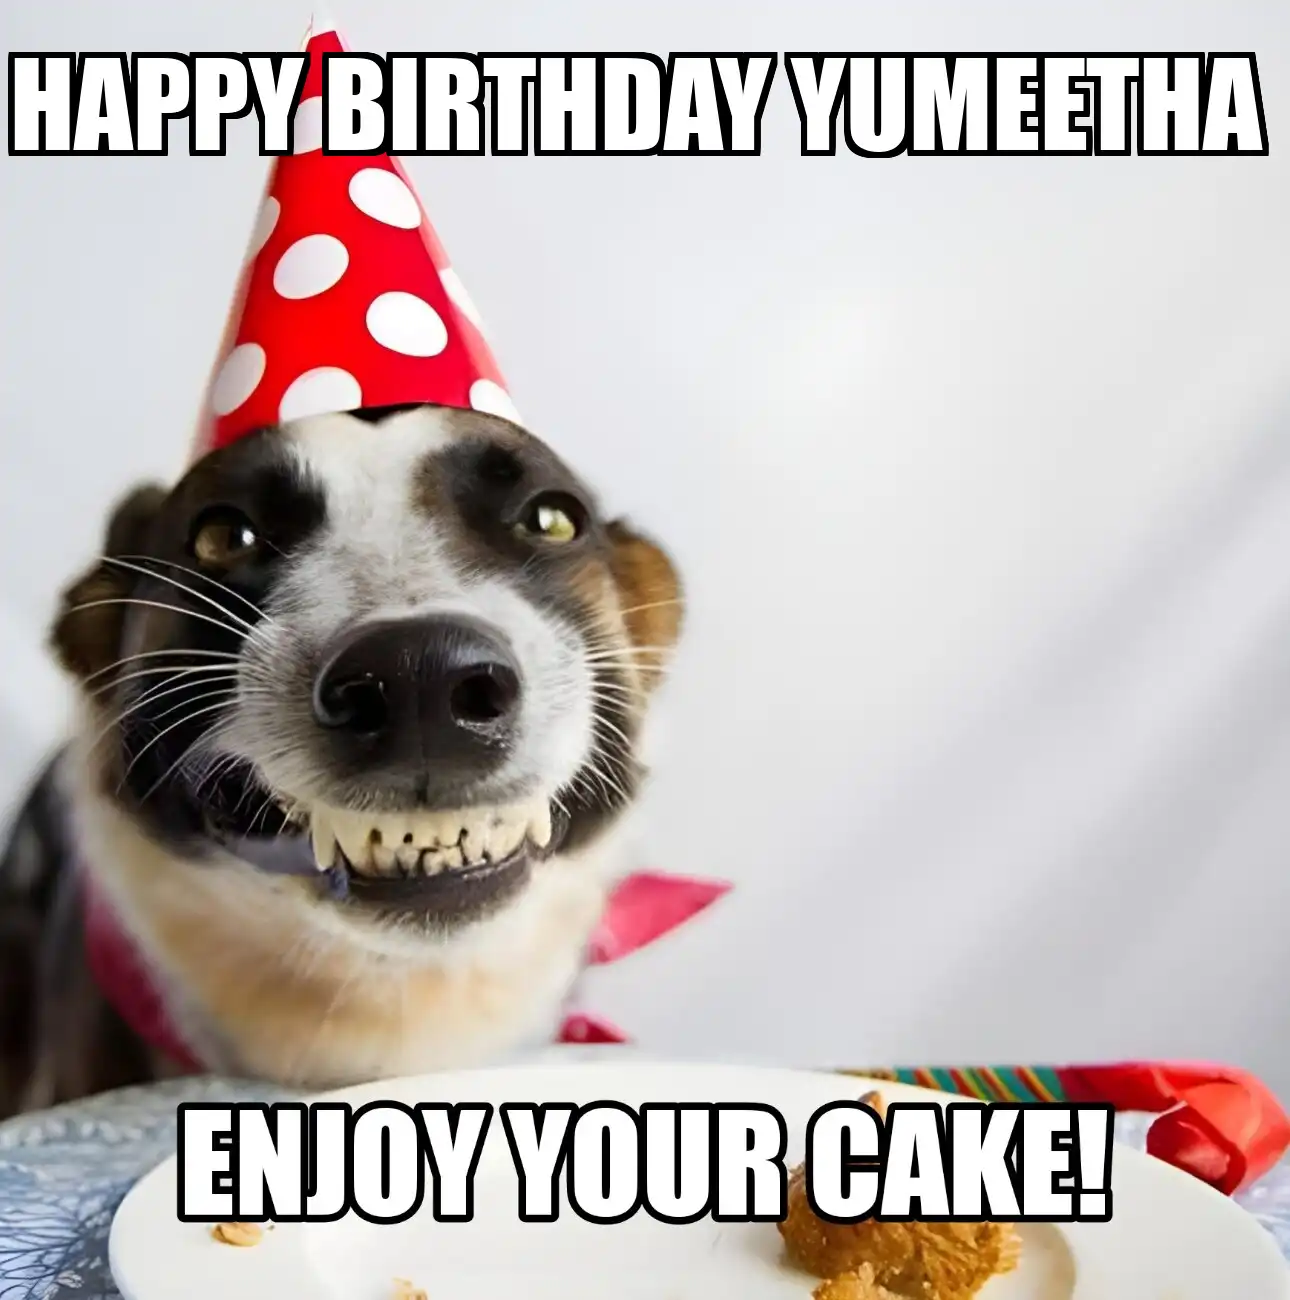 Happy Birthday Yumeetha Enjoy Your Cake Dog Meme